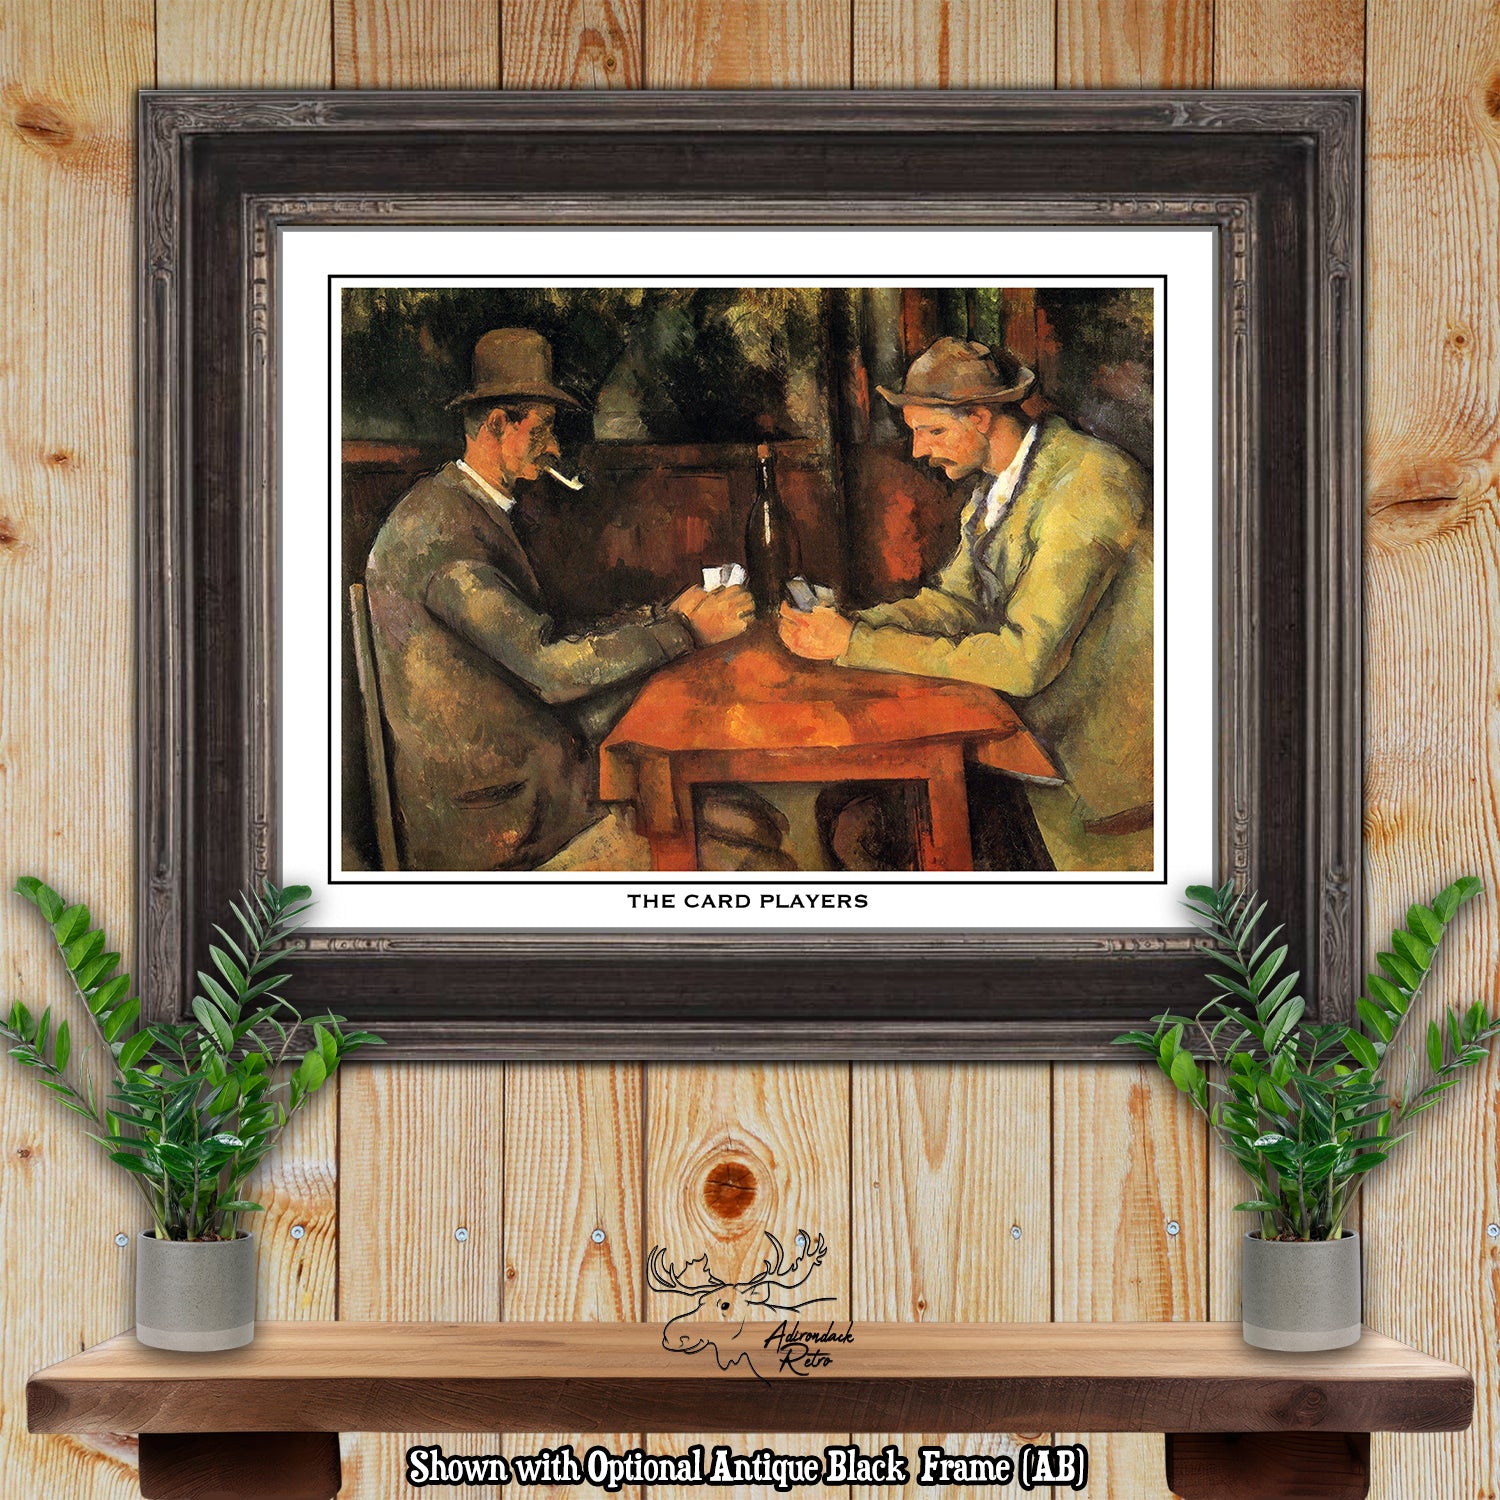 The Card Players by Paul Cezanne Giclee Fine Art Poker Print at Adirondack Retro